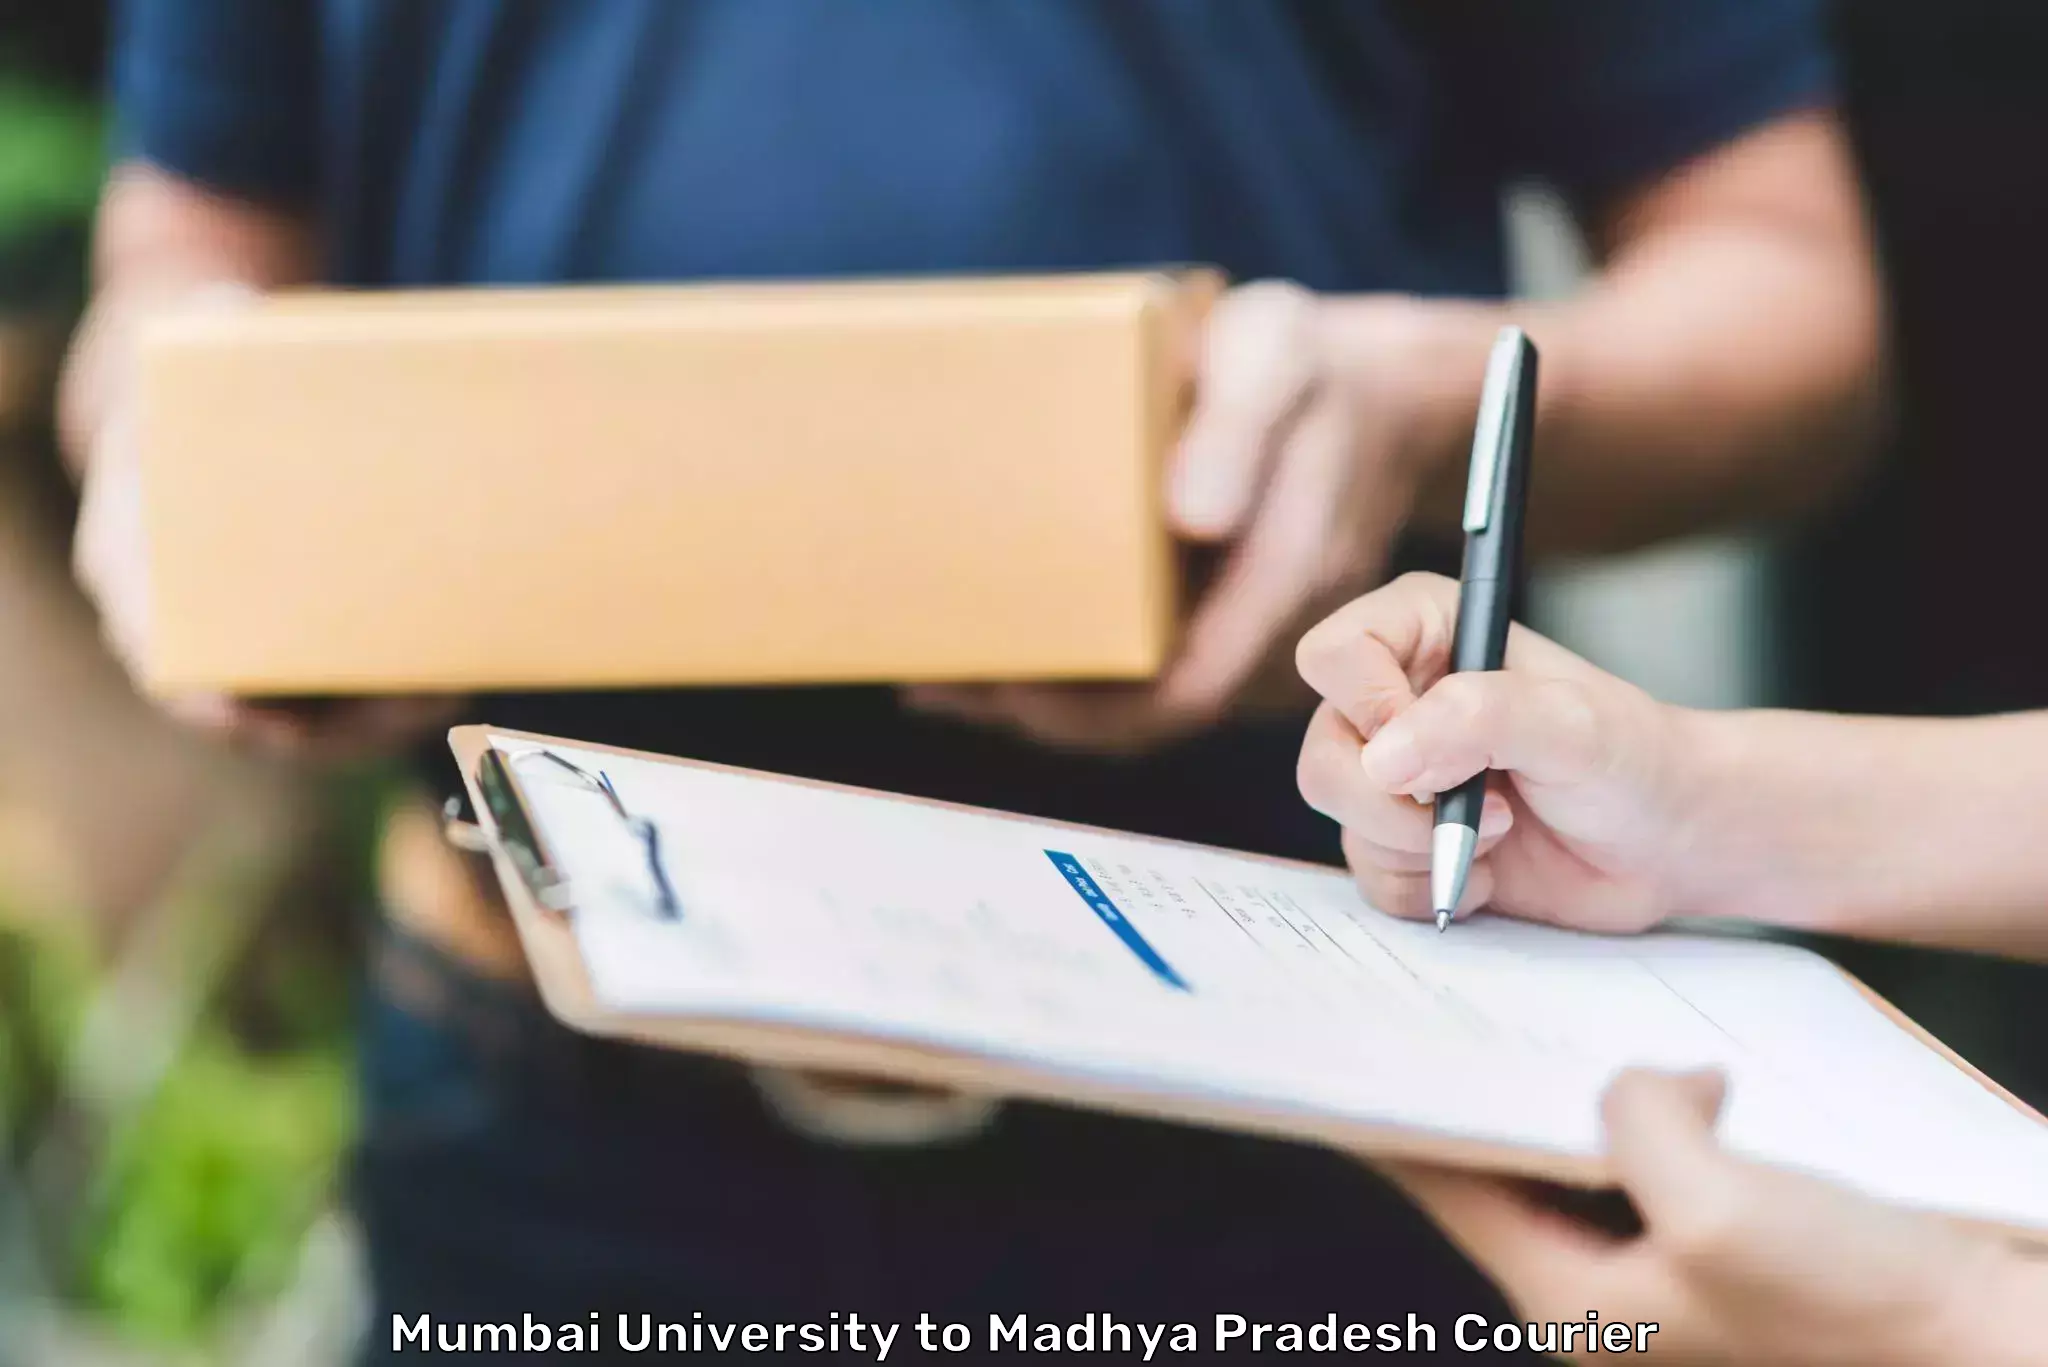 Pharmaceutical courier Mumbai University to Silwani